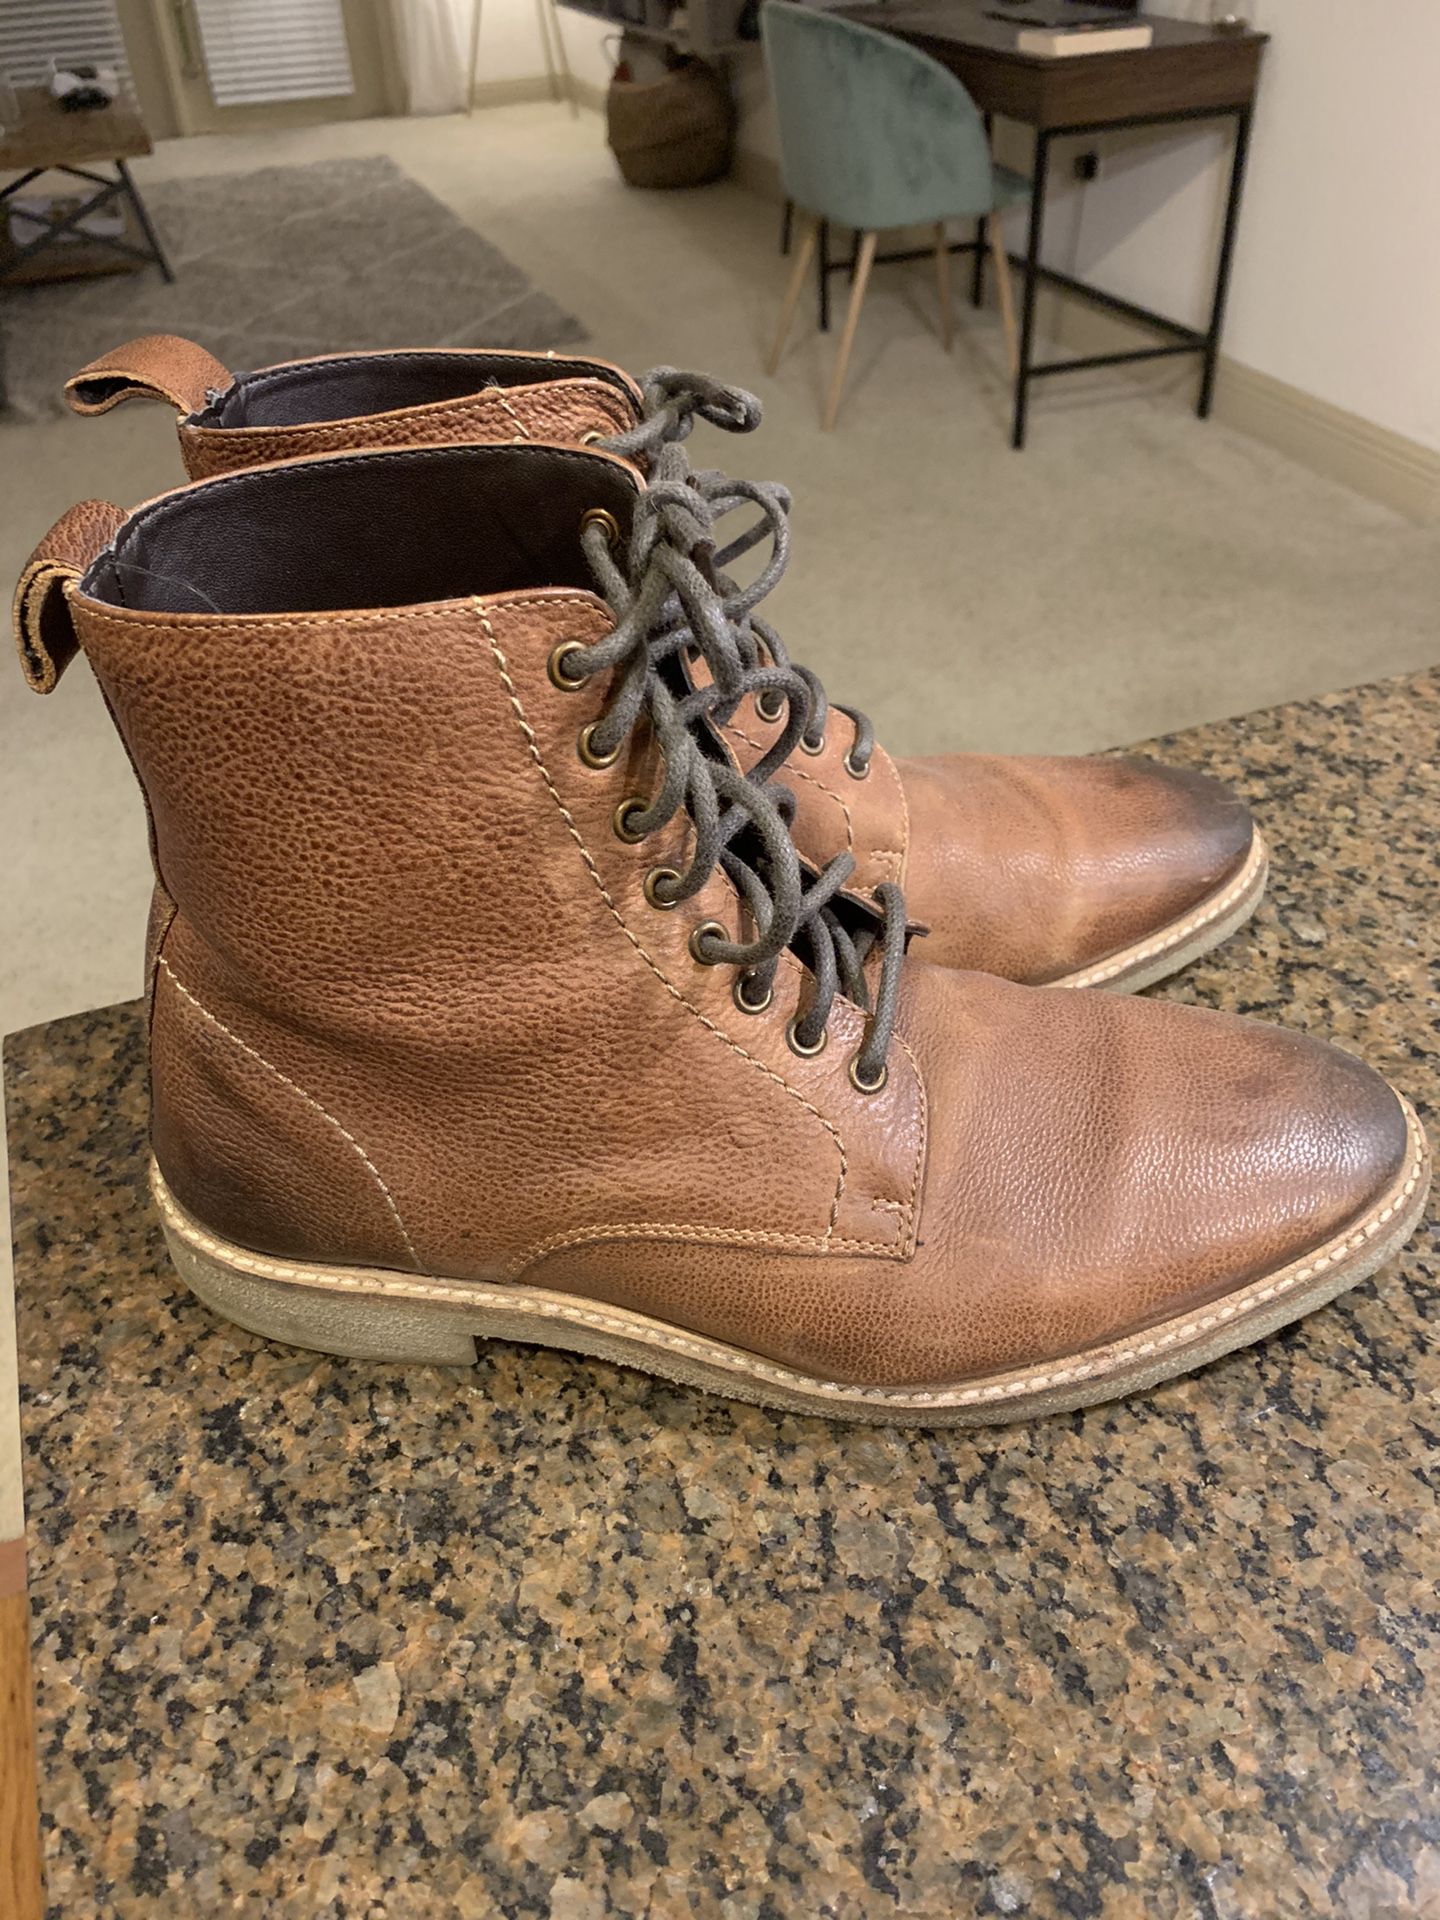 ASOS brown boots